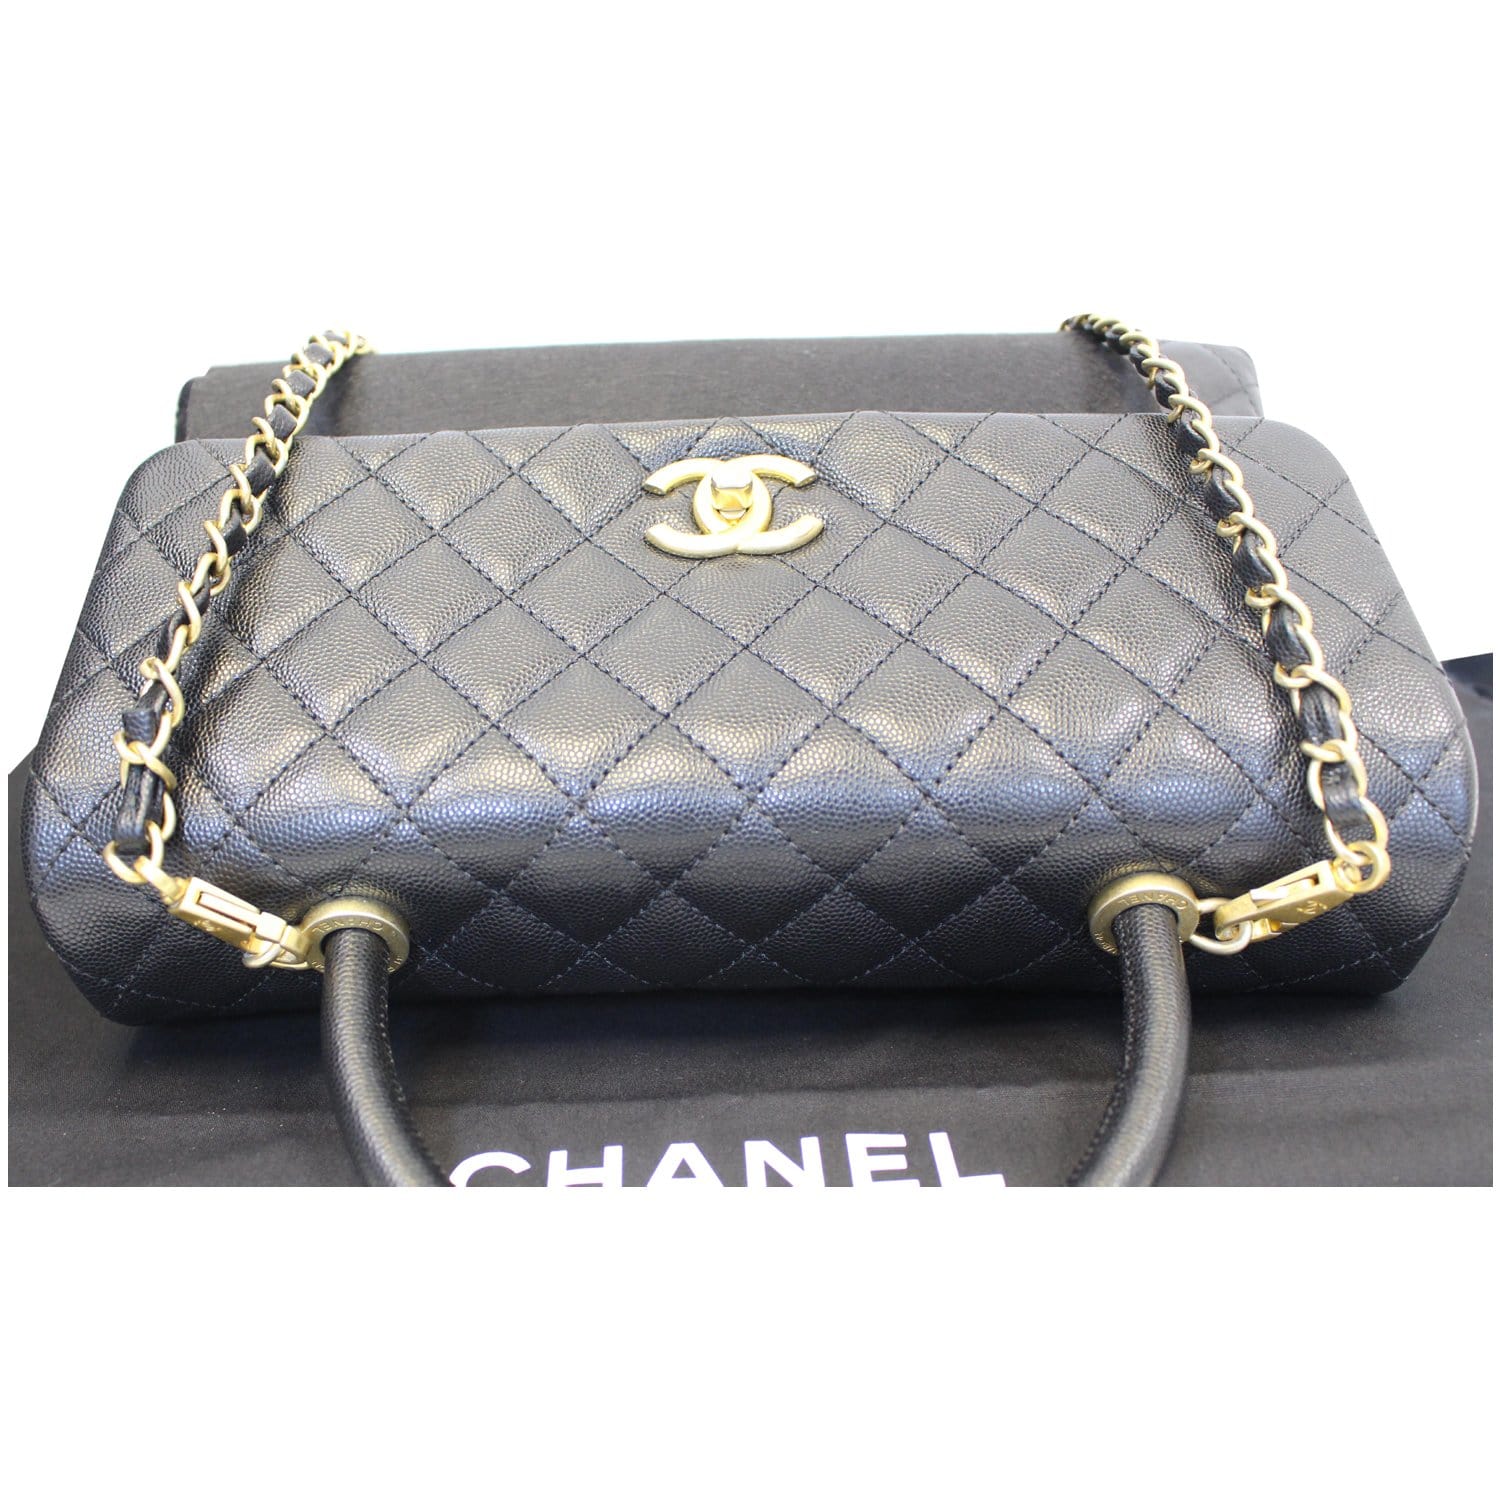 Chanel Authenticated Handbag